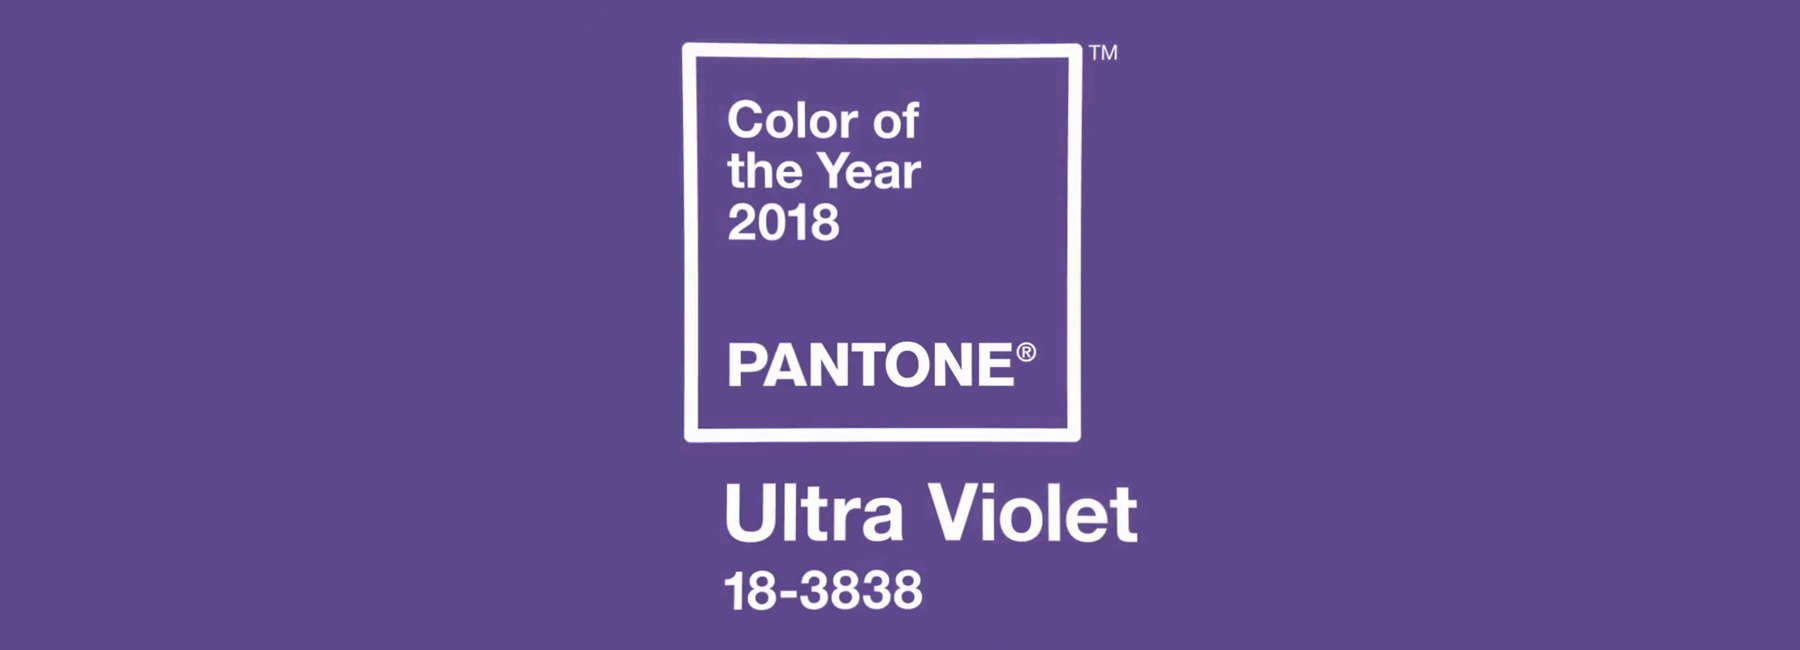 pantone-color-of-the-year-2018-ultra-violet-designboom-1800